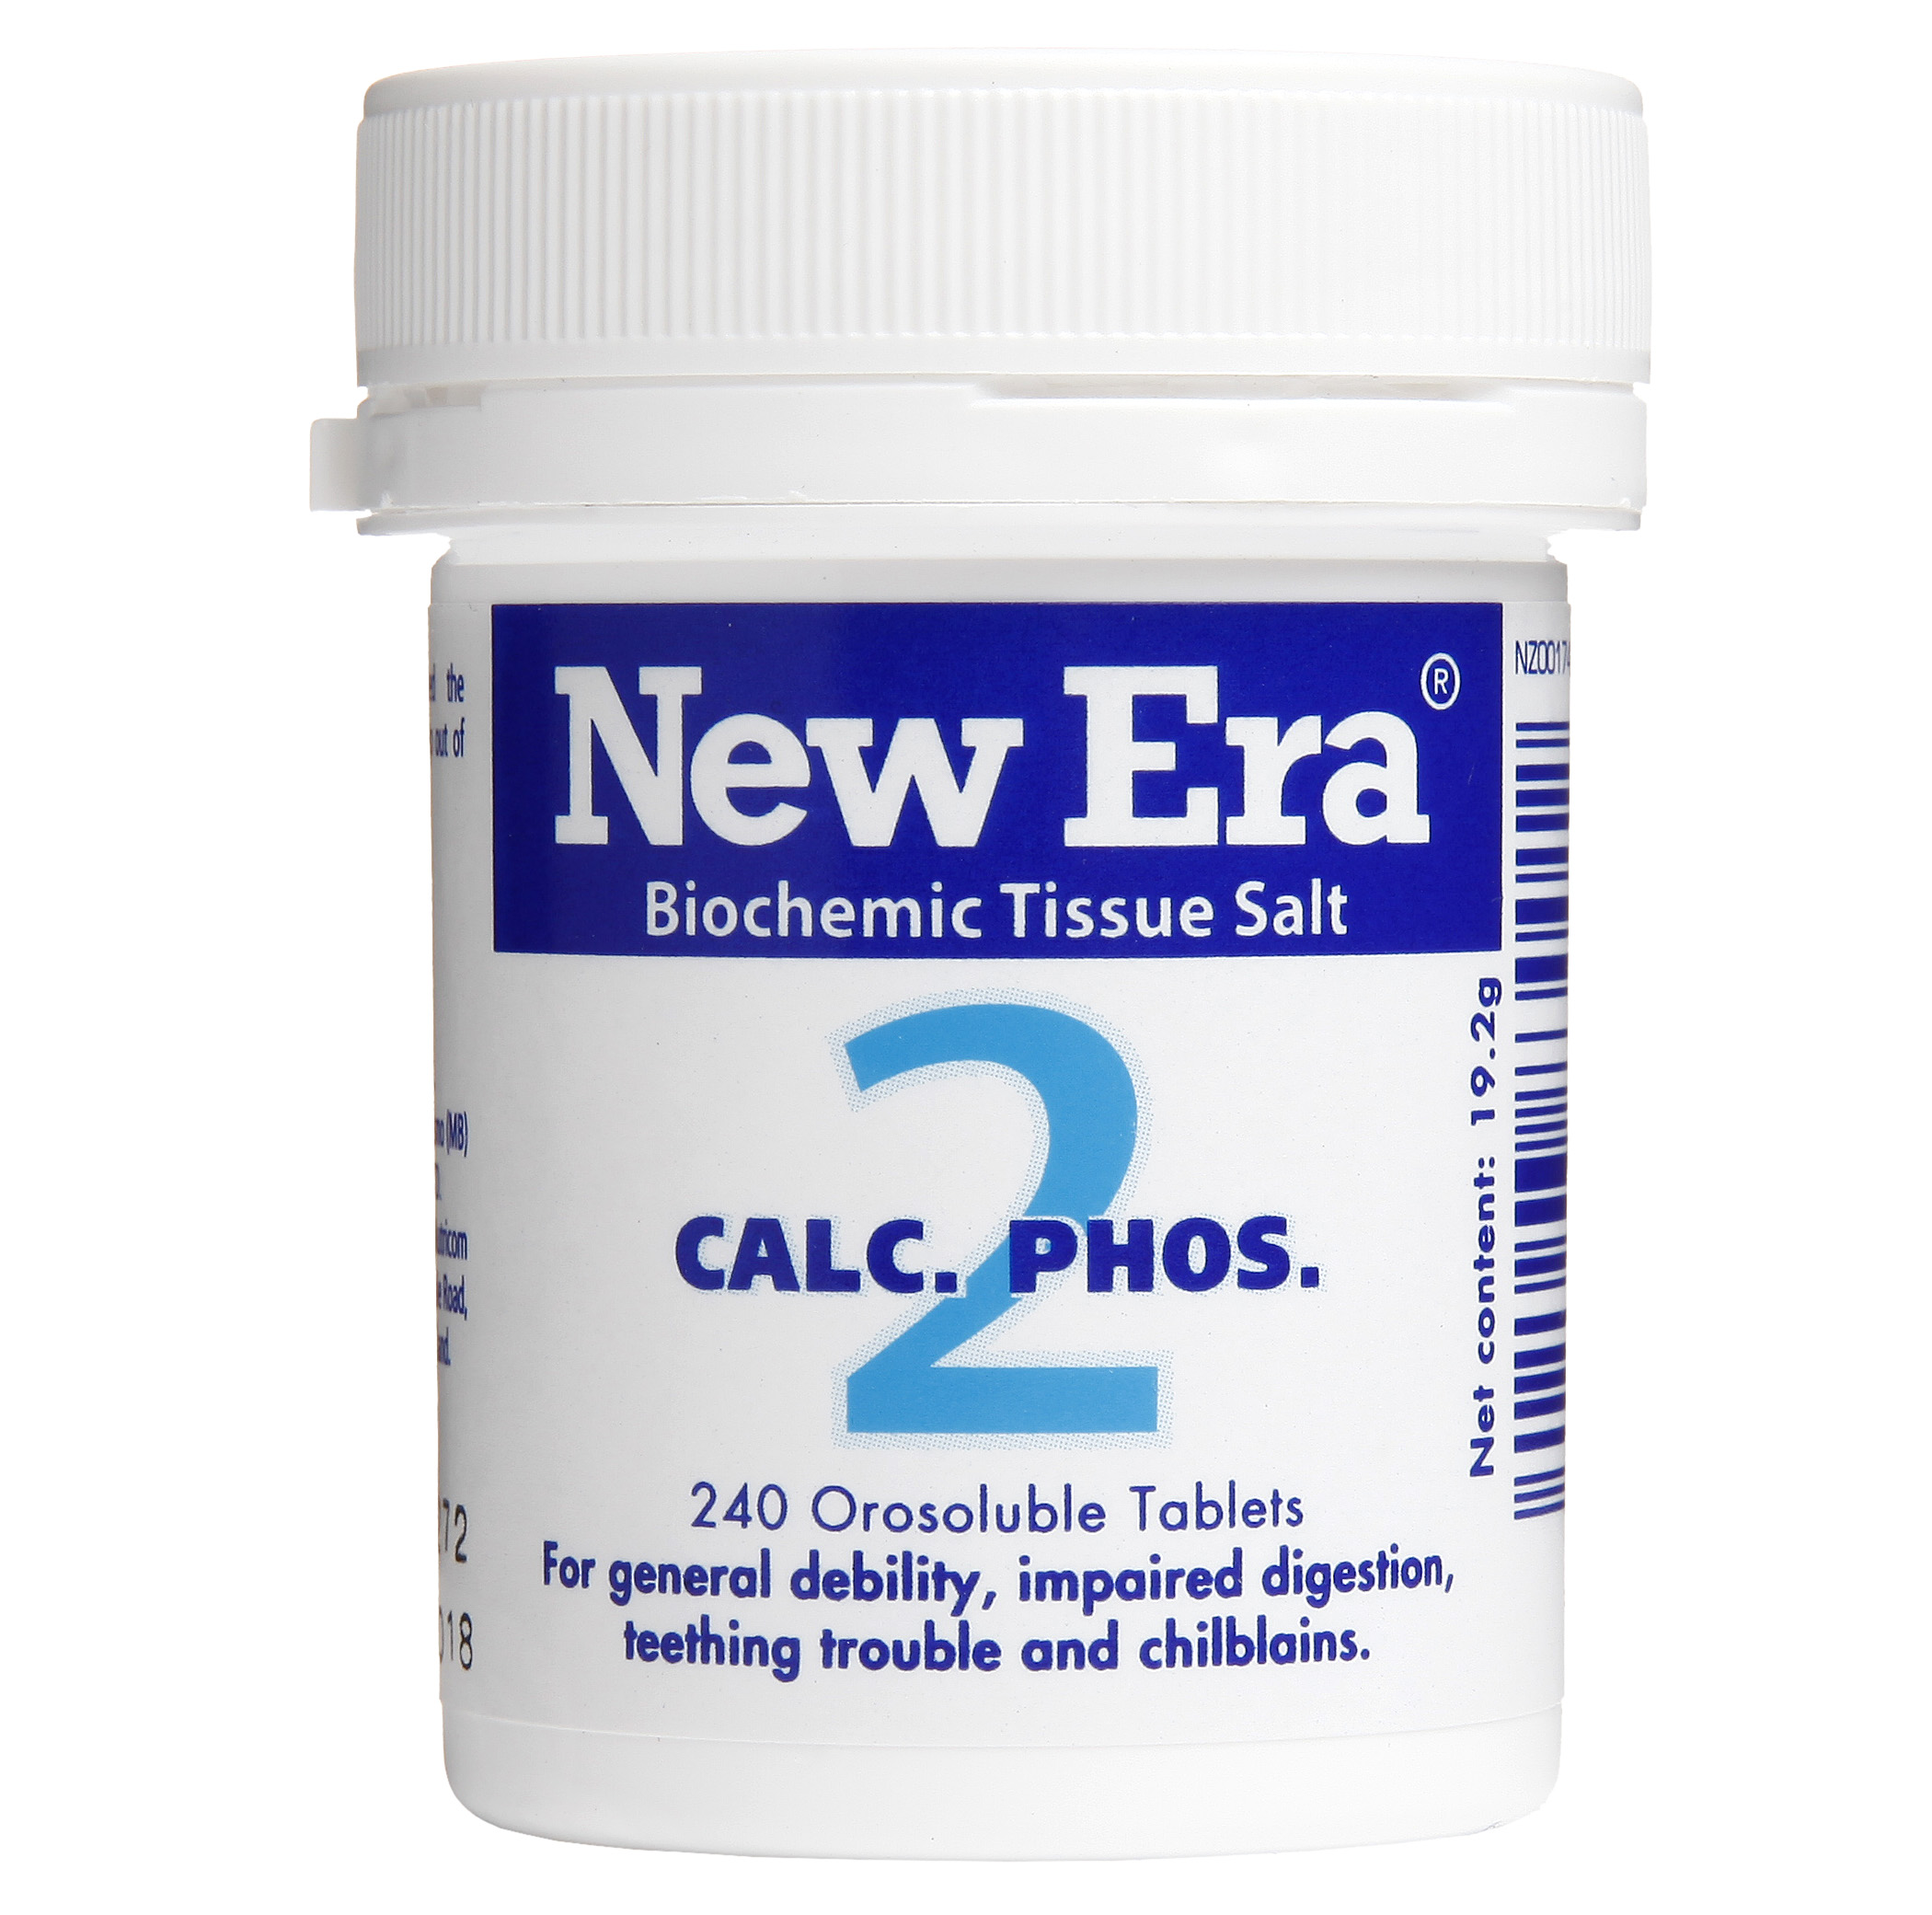 New Era Tissue Salt Calc. Phos. #02 - The Cell Builder